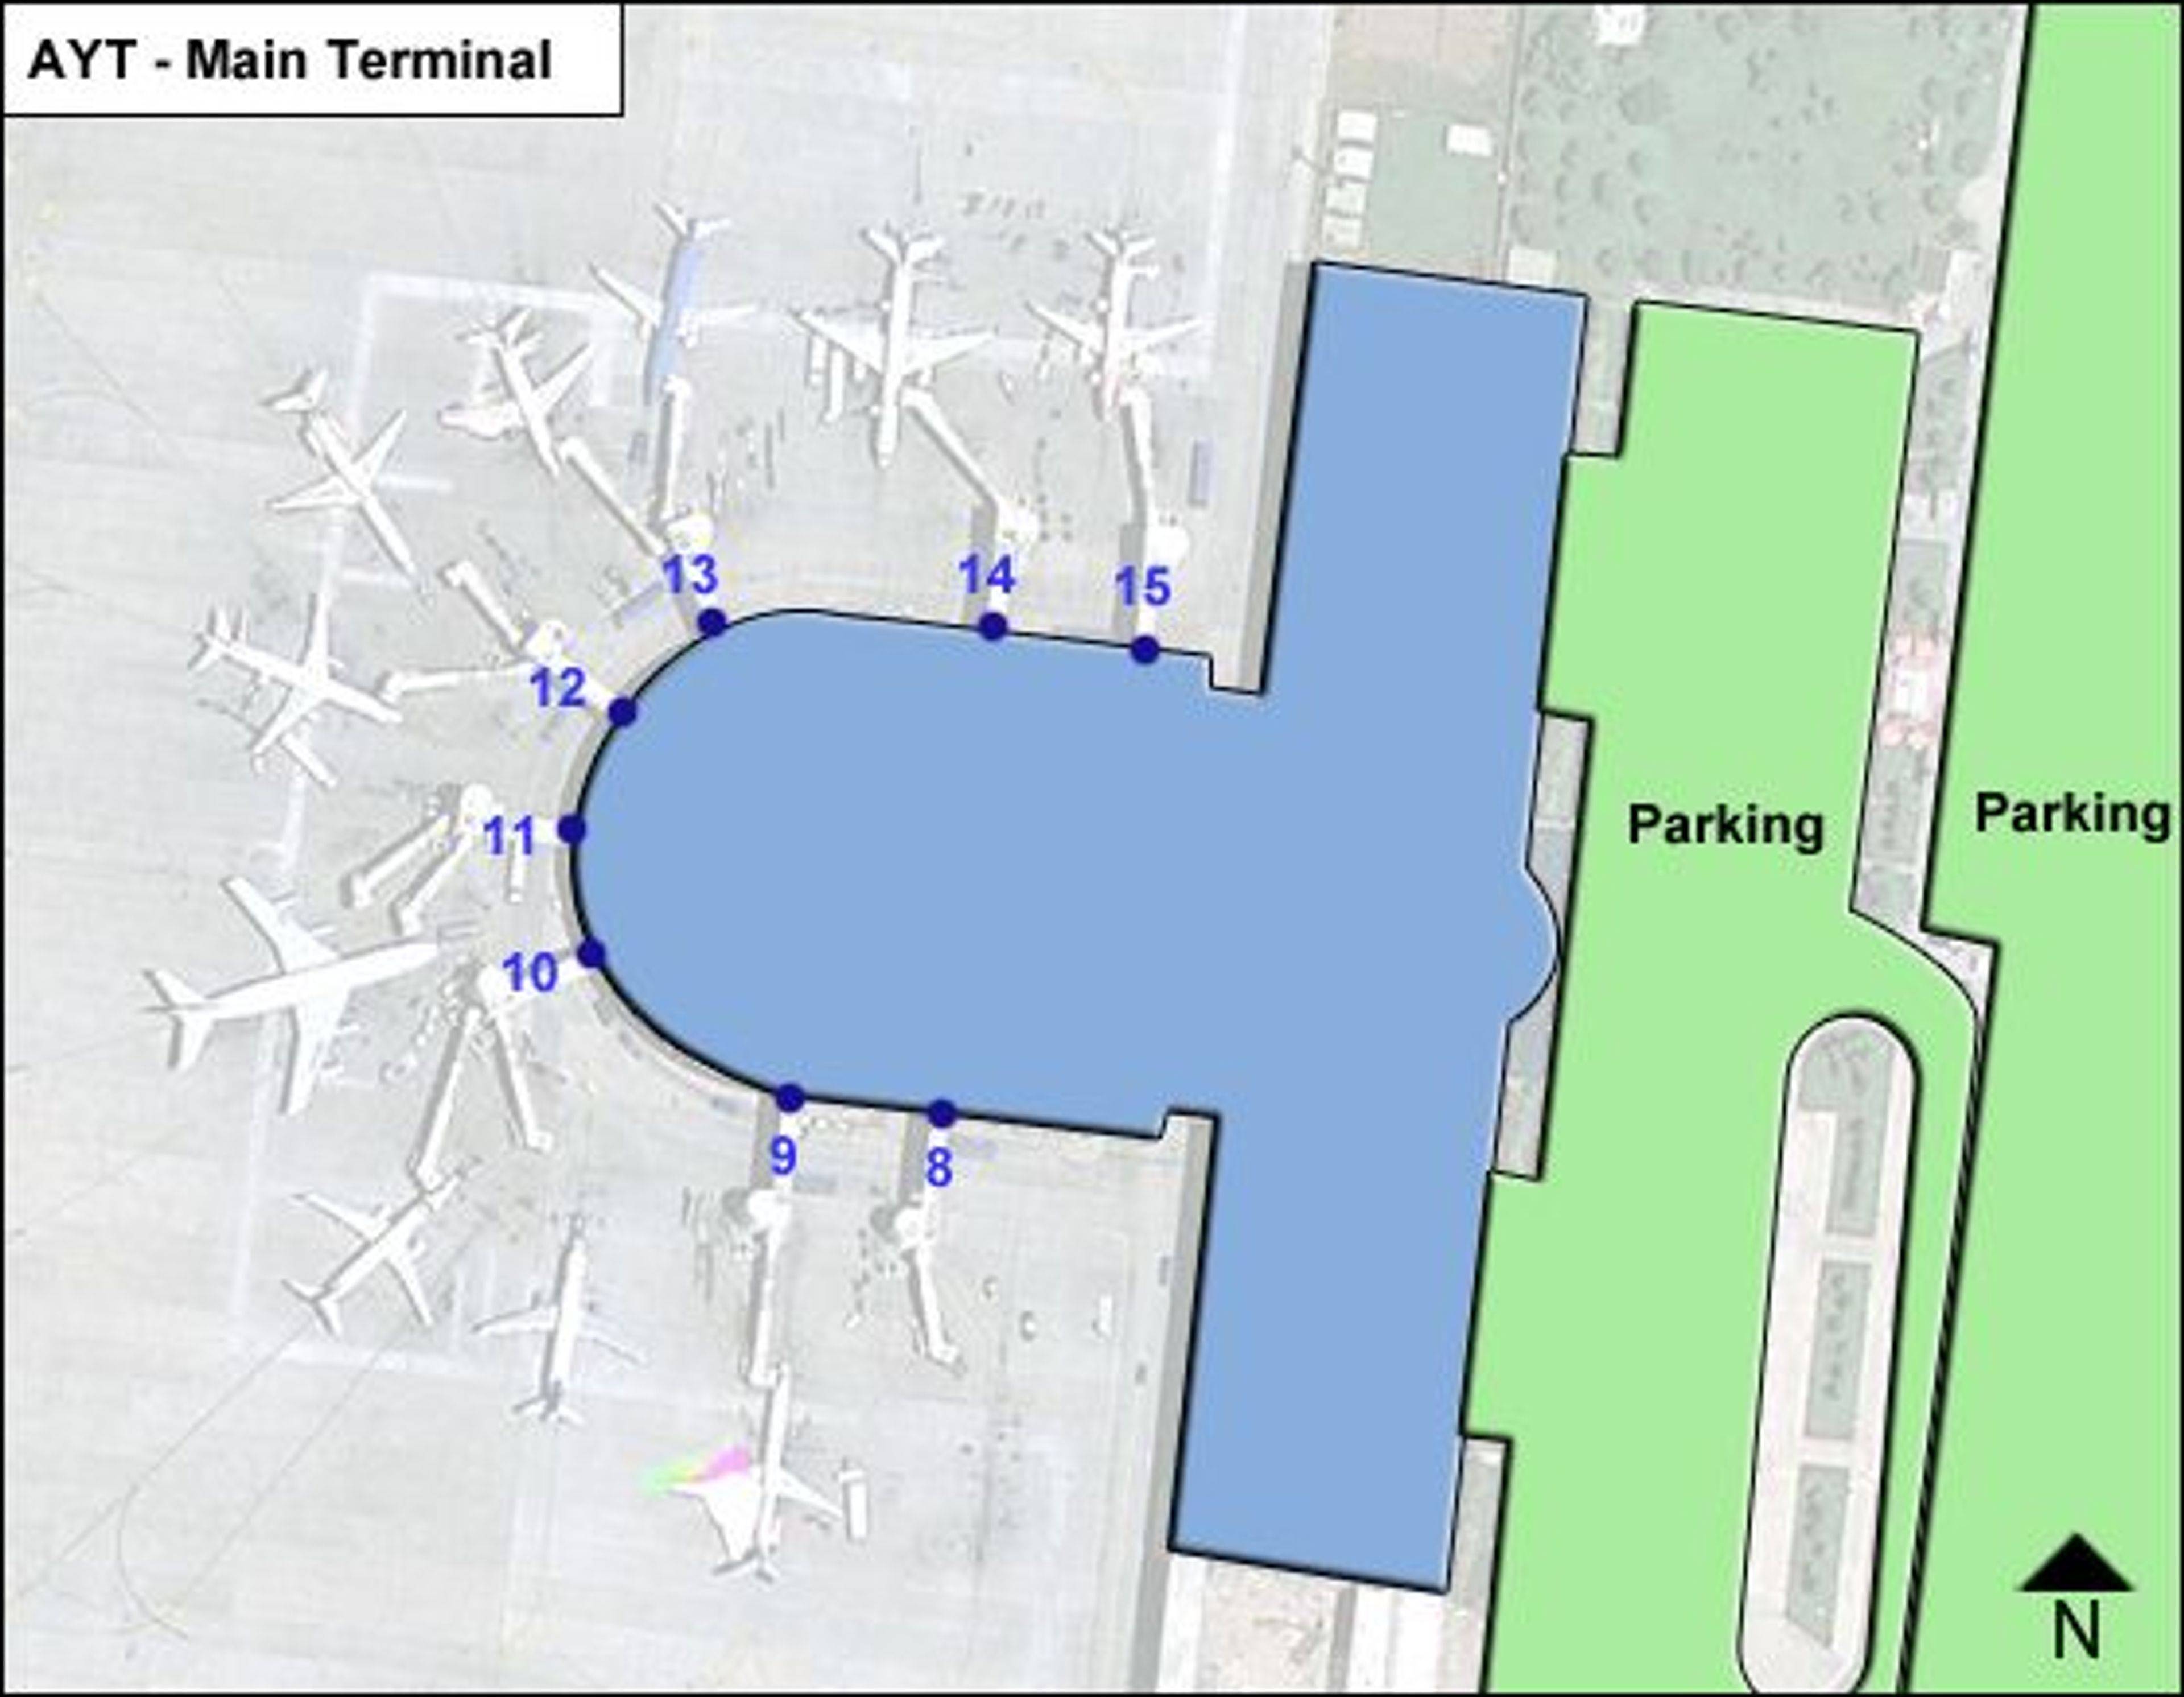 Havalimani Airport Main Terminal Map